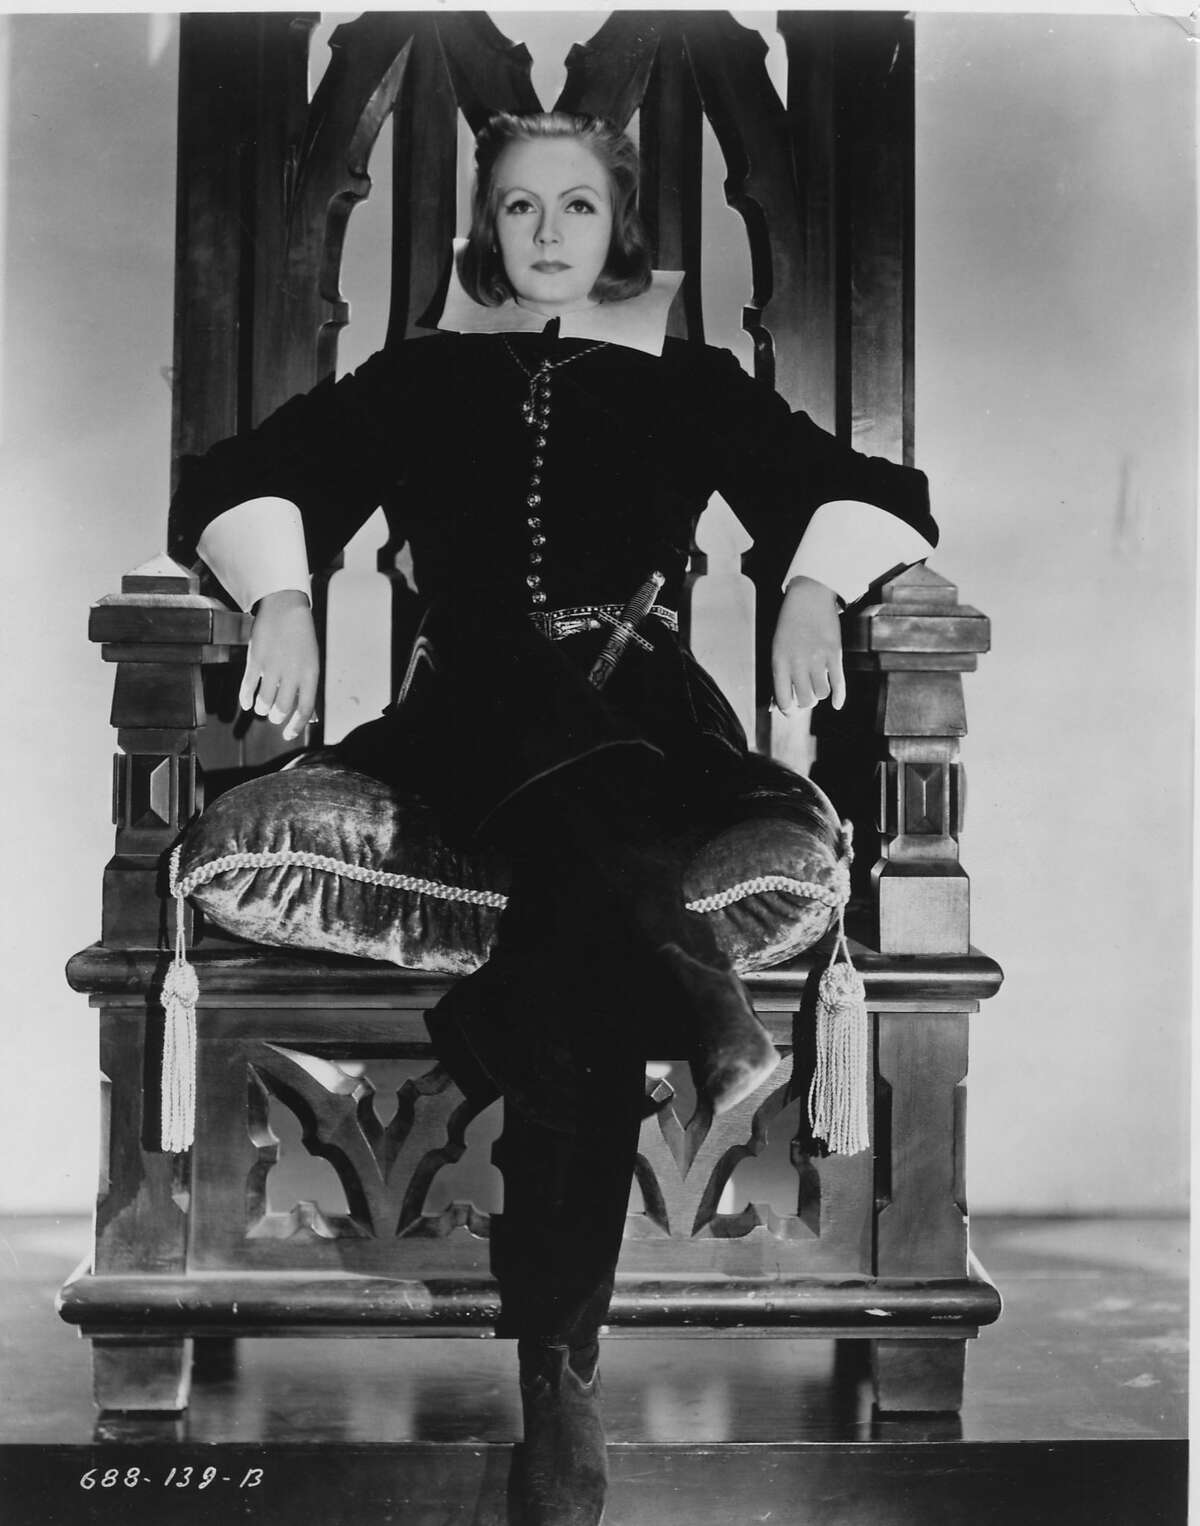 Greta Garbo in "Queen Christina" (1933).